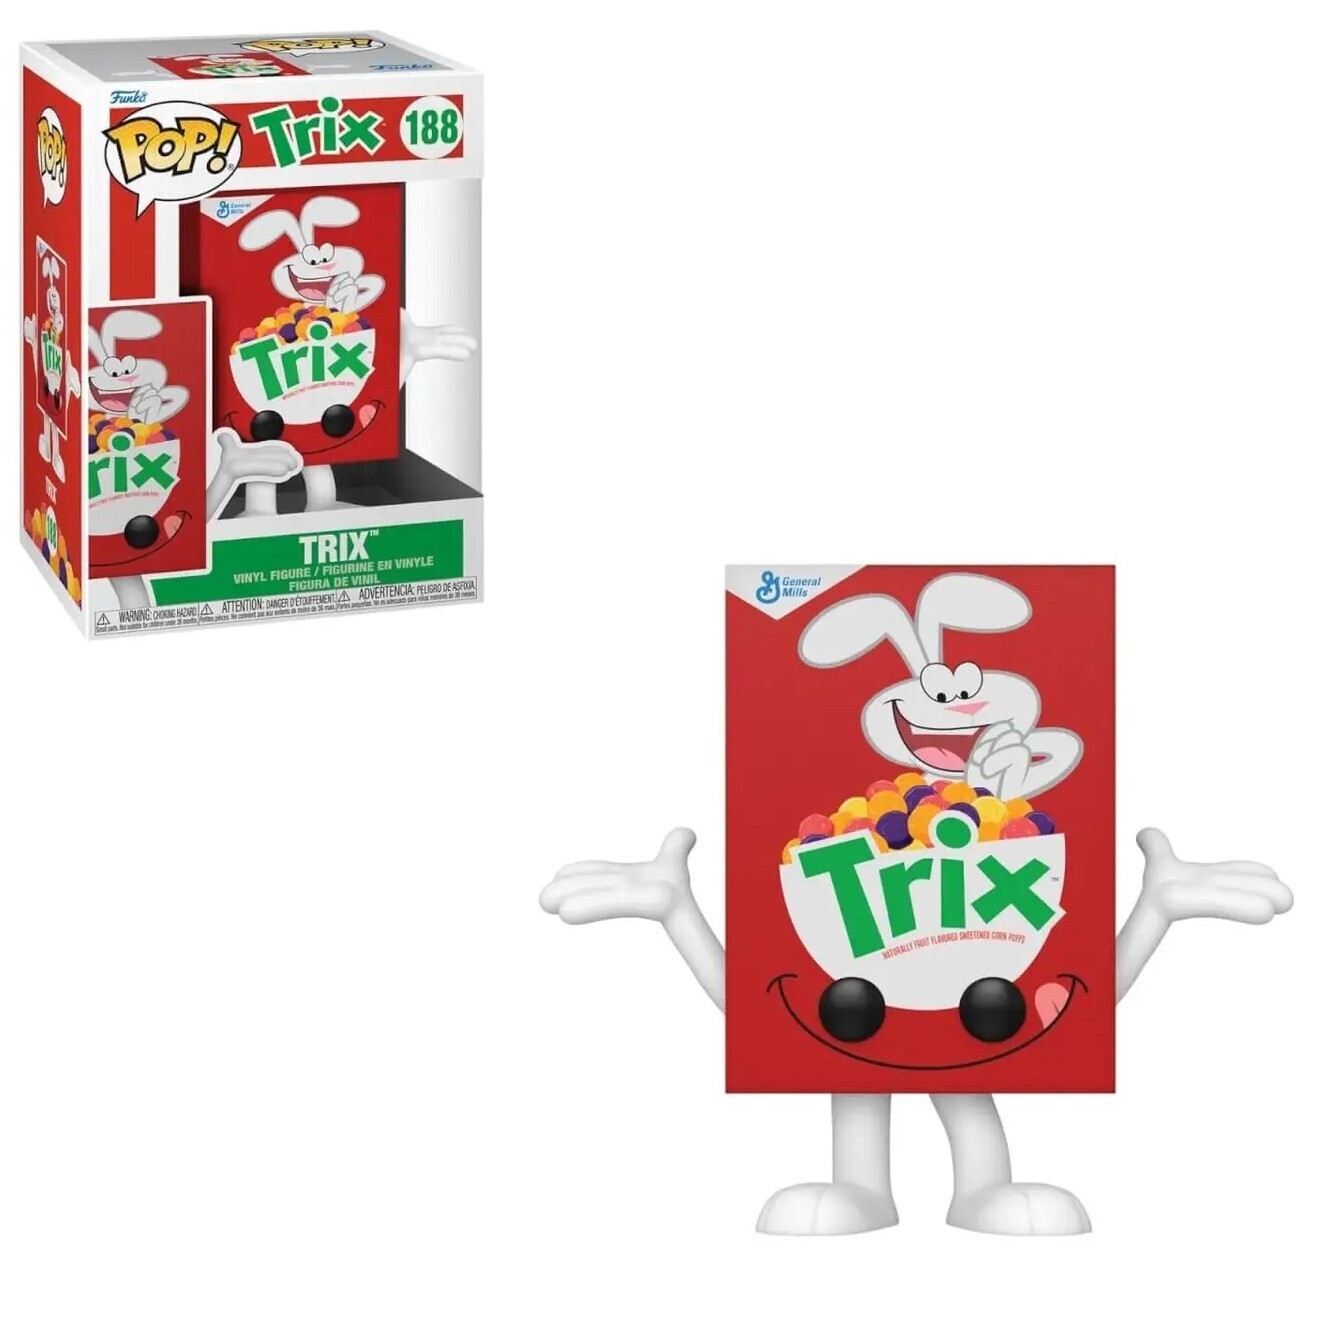 Trix Cereal Box 3 3/4"H POP! Vinyl Figure